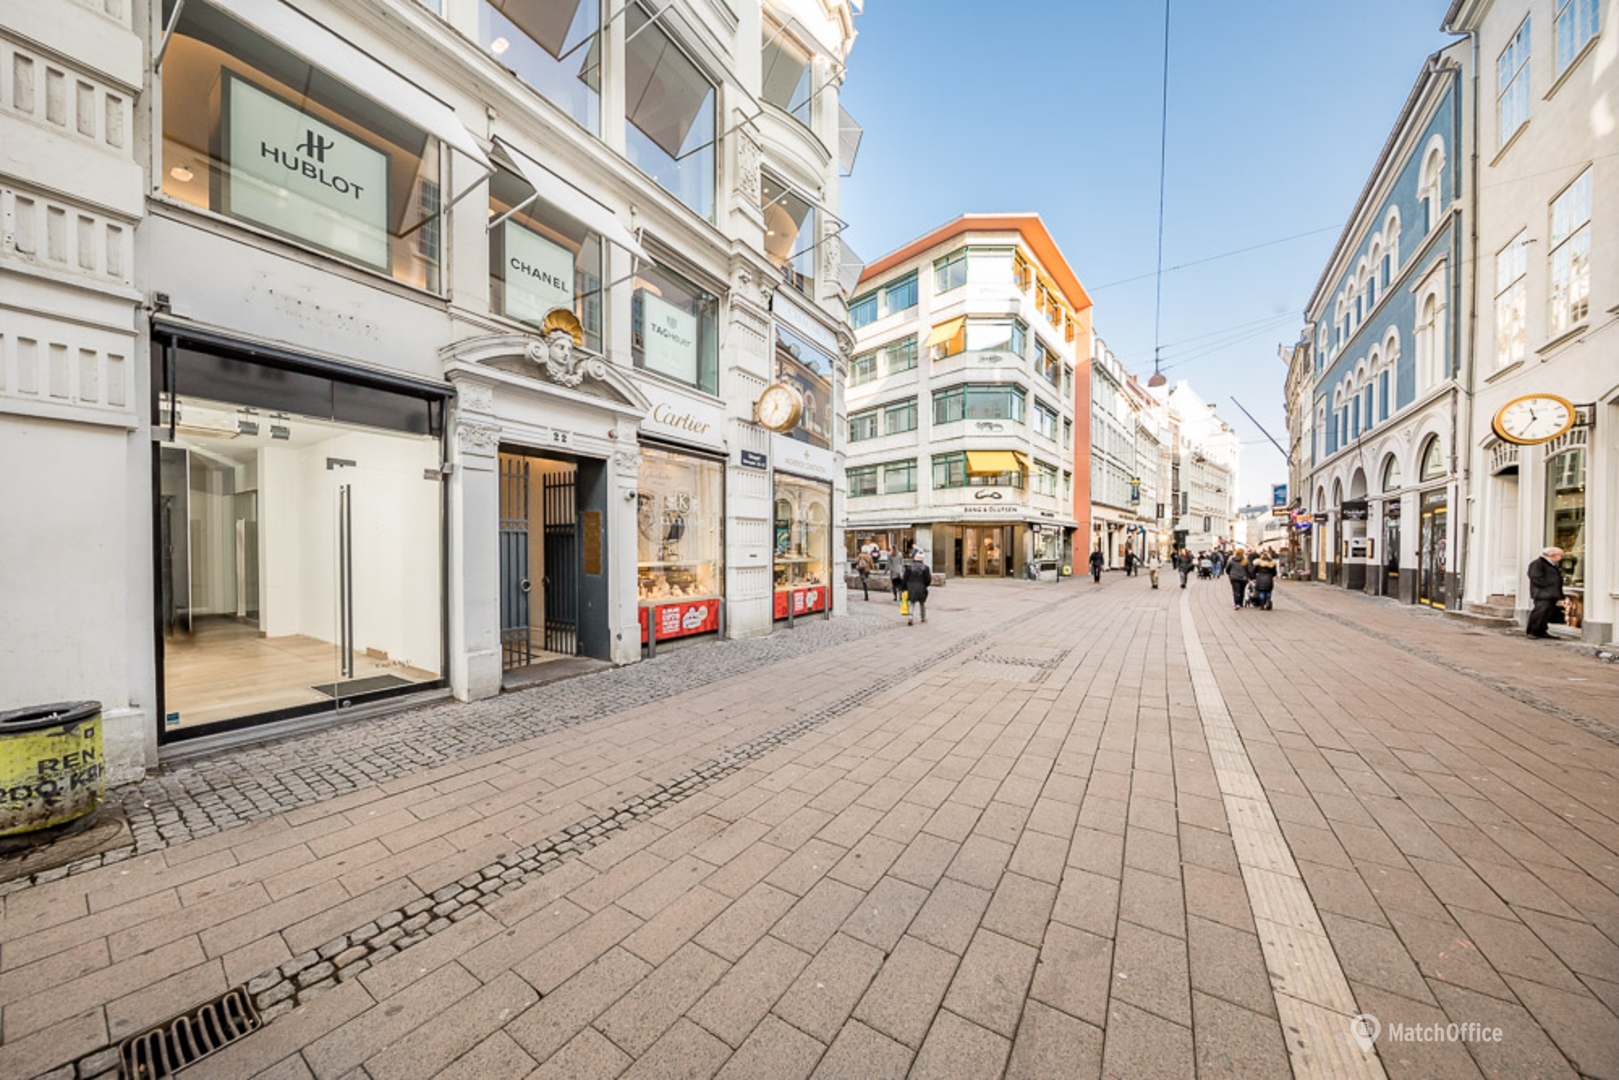 syreindhold for eksempel nylon A commercial store up for rent in Copenhagen City Center ✓ MatchOffice.com